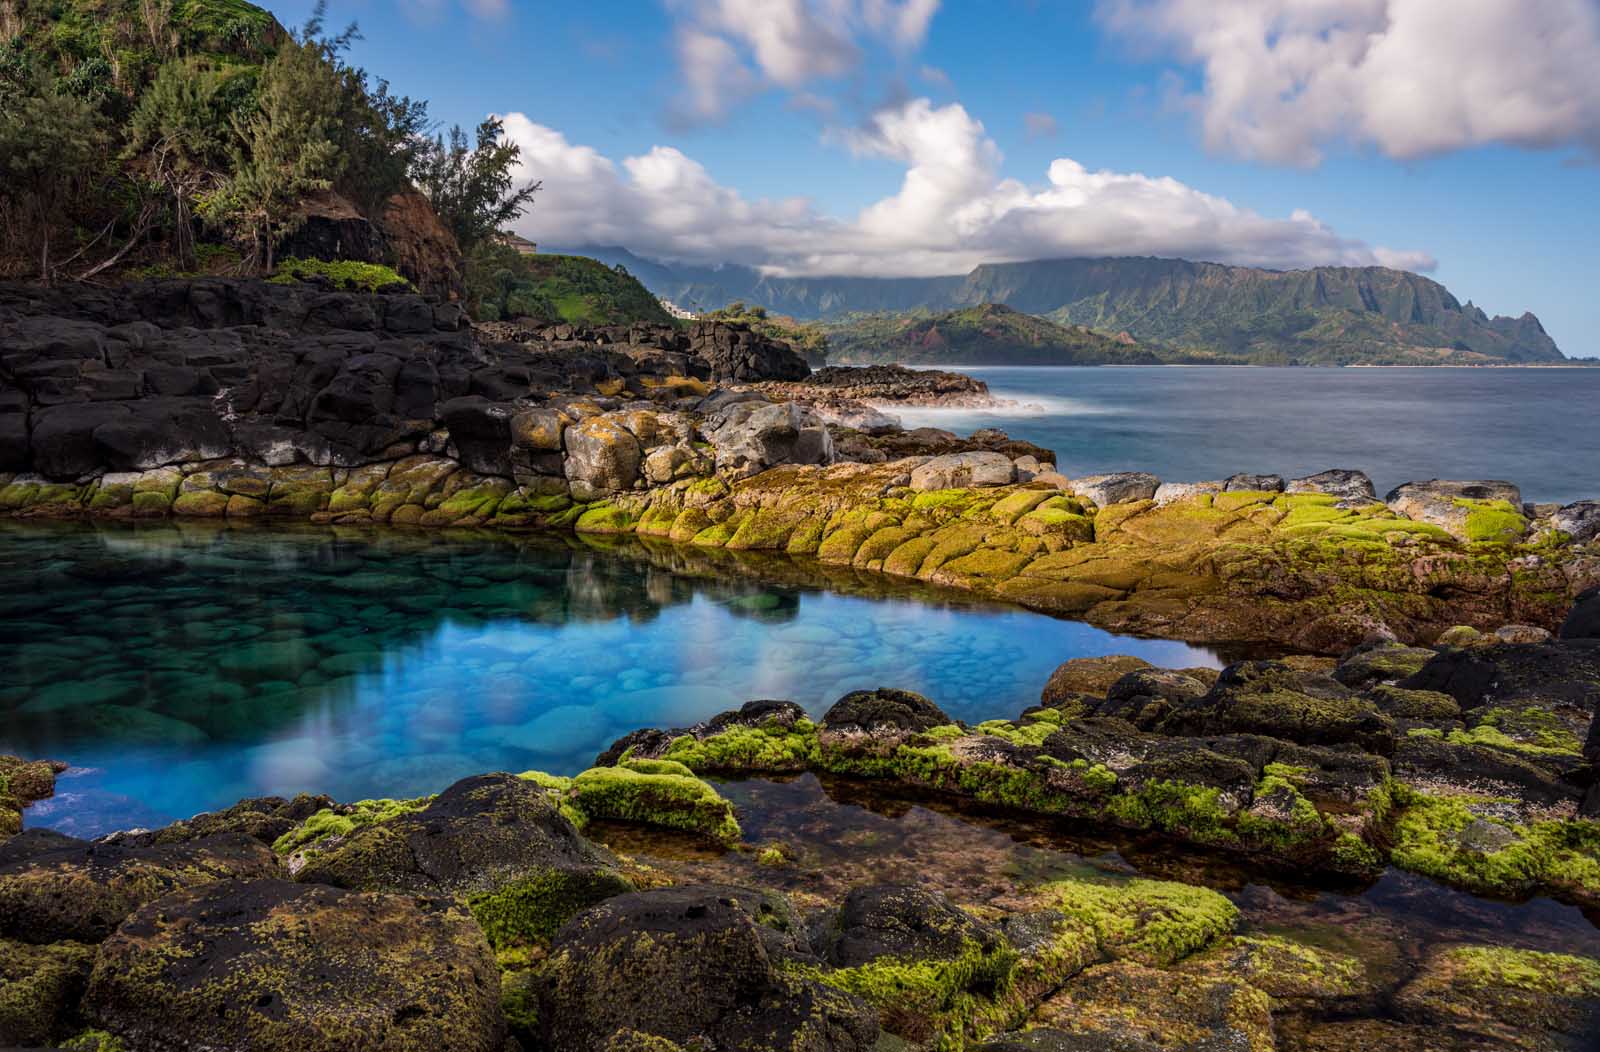 Queens Bath located in Kauai Hawaii